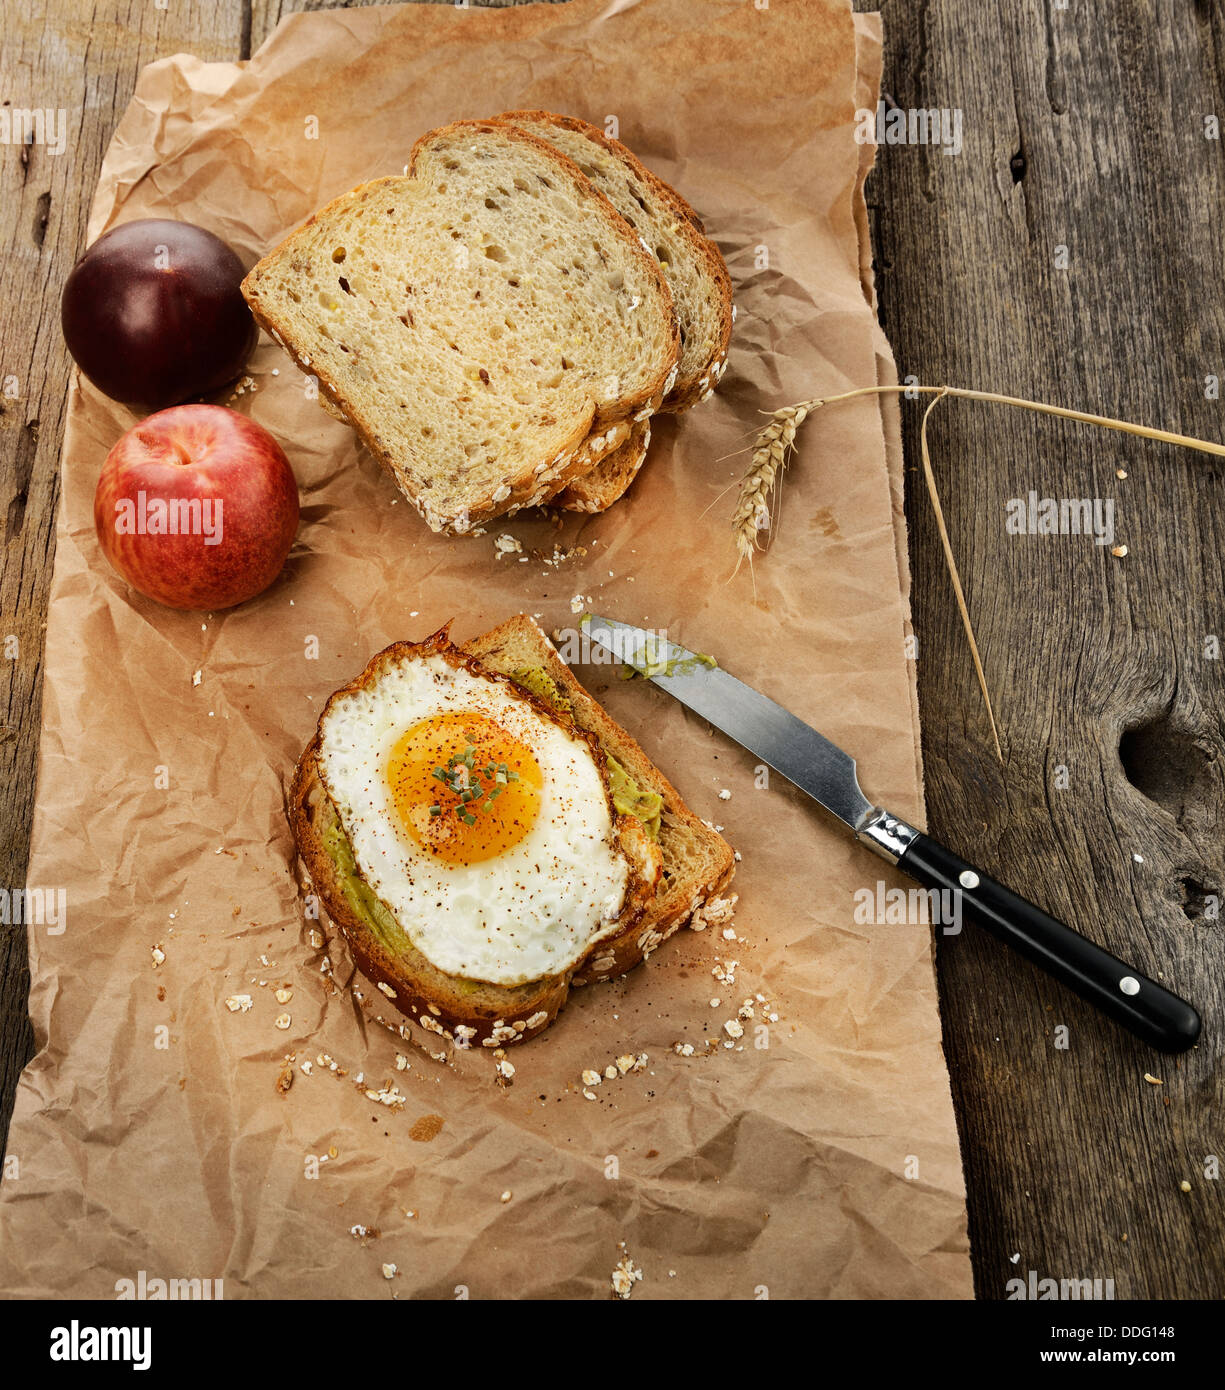 Avocado-Frühstücks-Sandwich mit Spiegelei Stockfoto